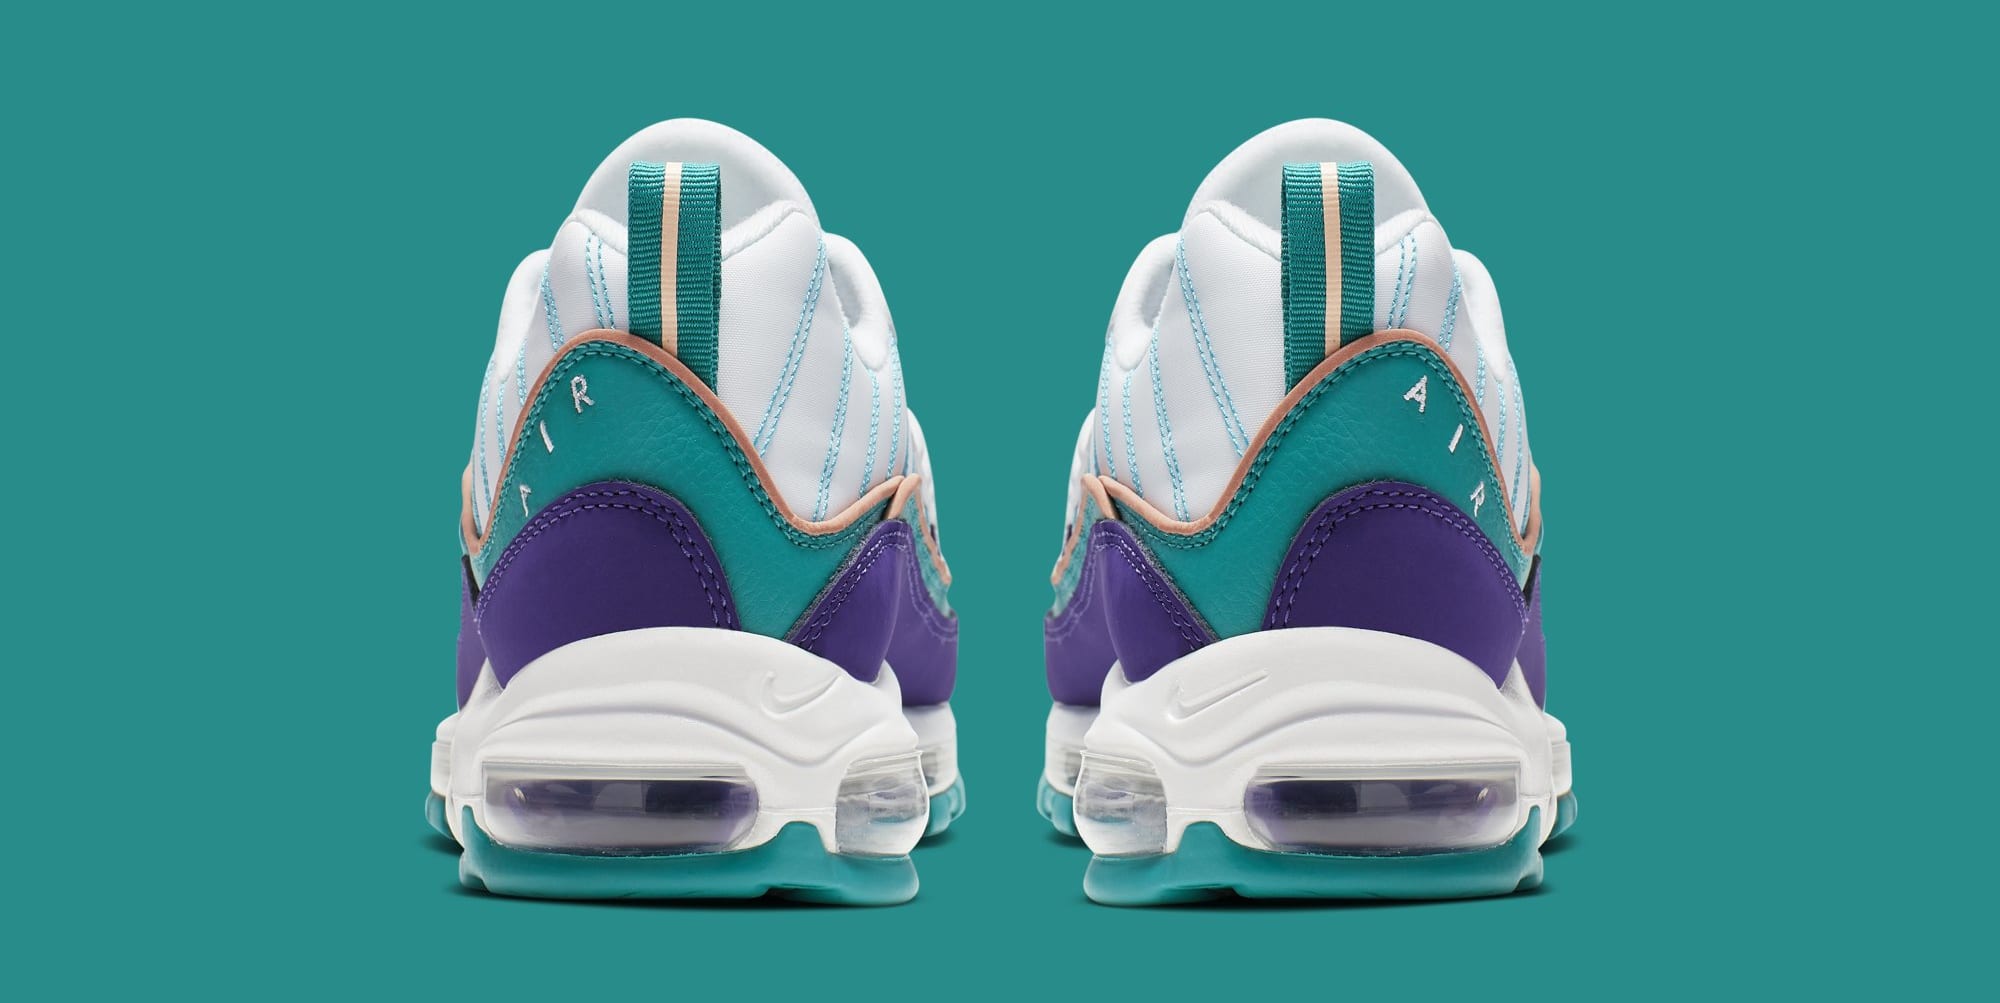 Inclinado Desaparecido Obligar Nike Air Max 98 'Court Purple/Terra Blush-Spirit Teal' 640744-500 Release  Date | Sole Collector